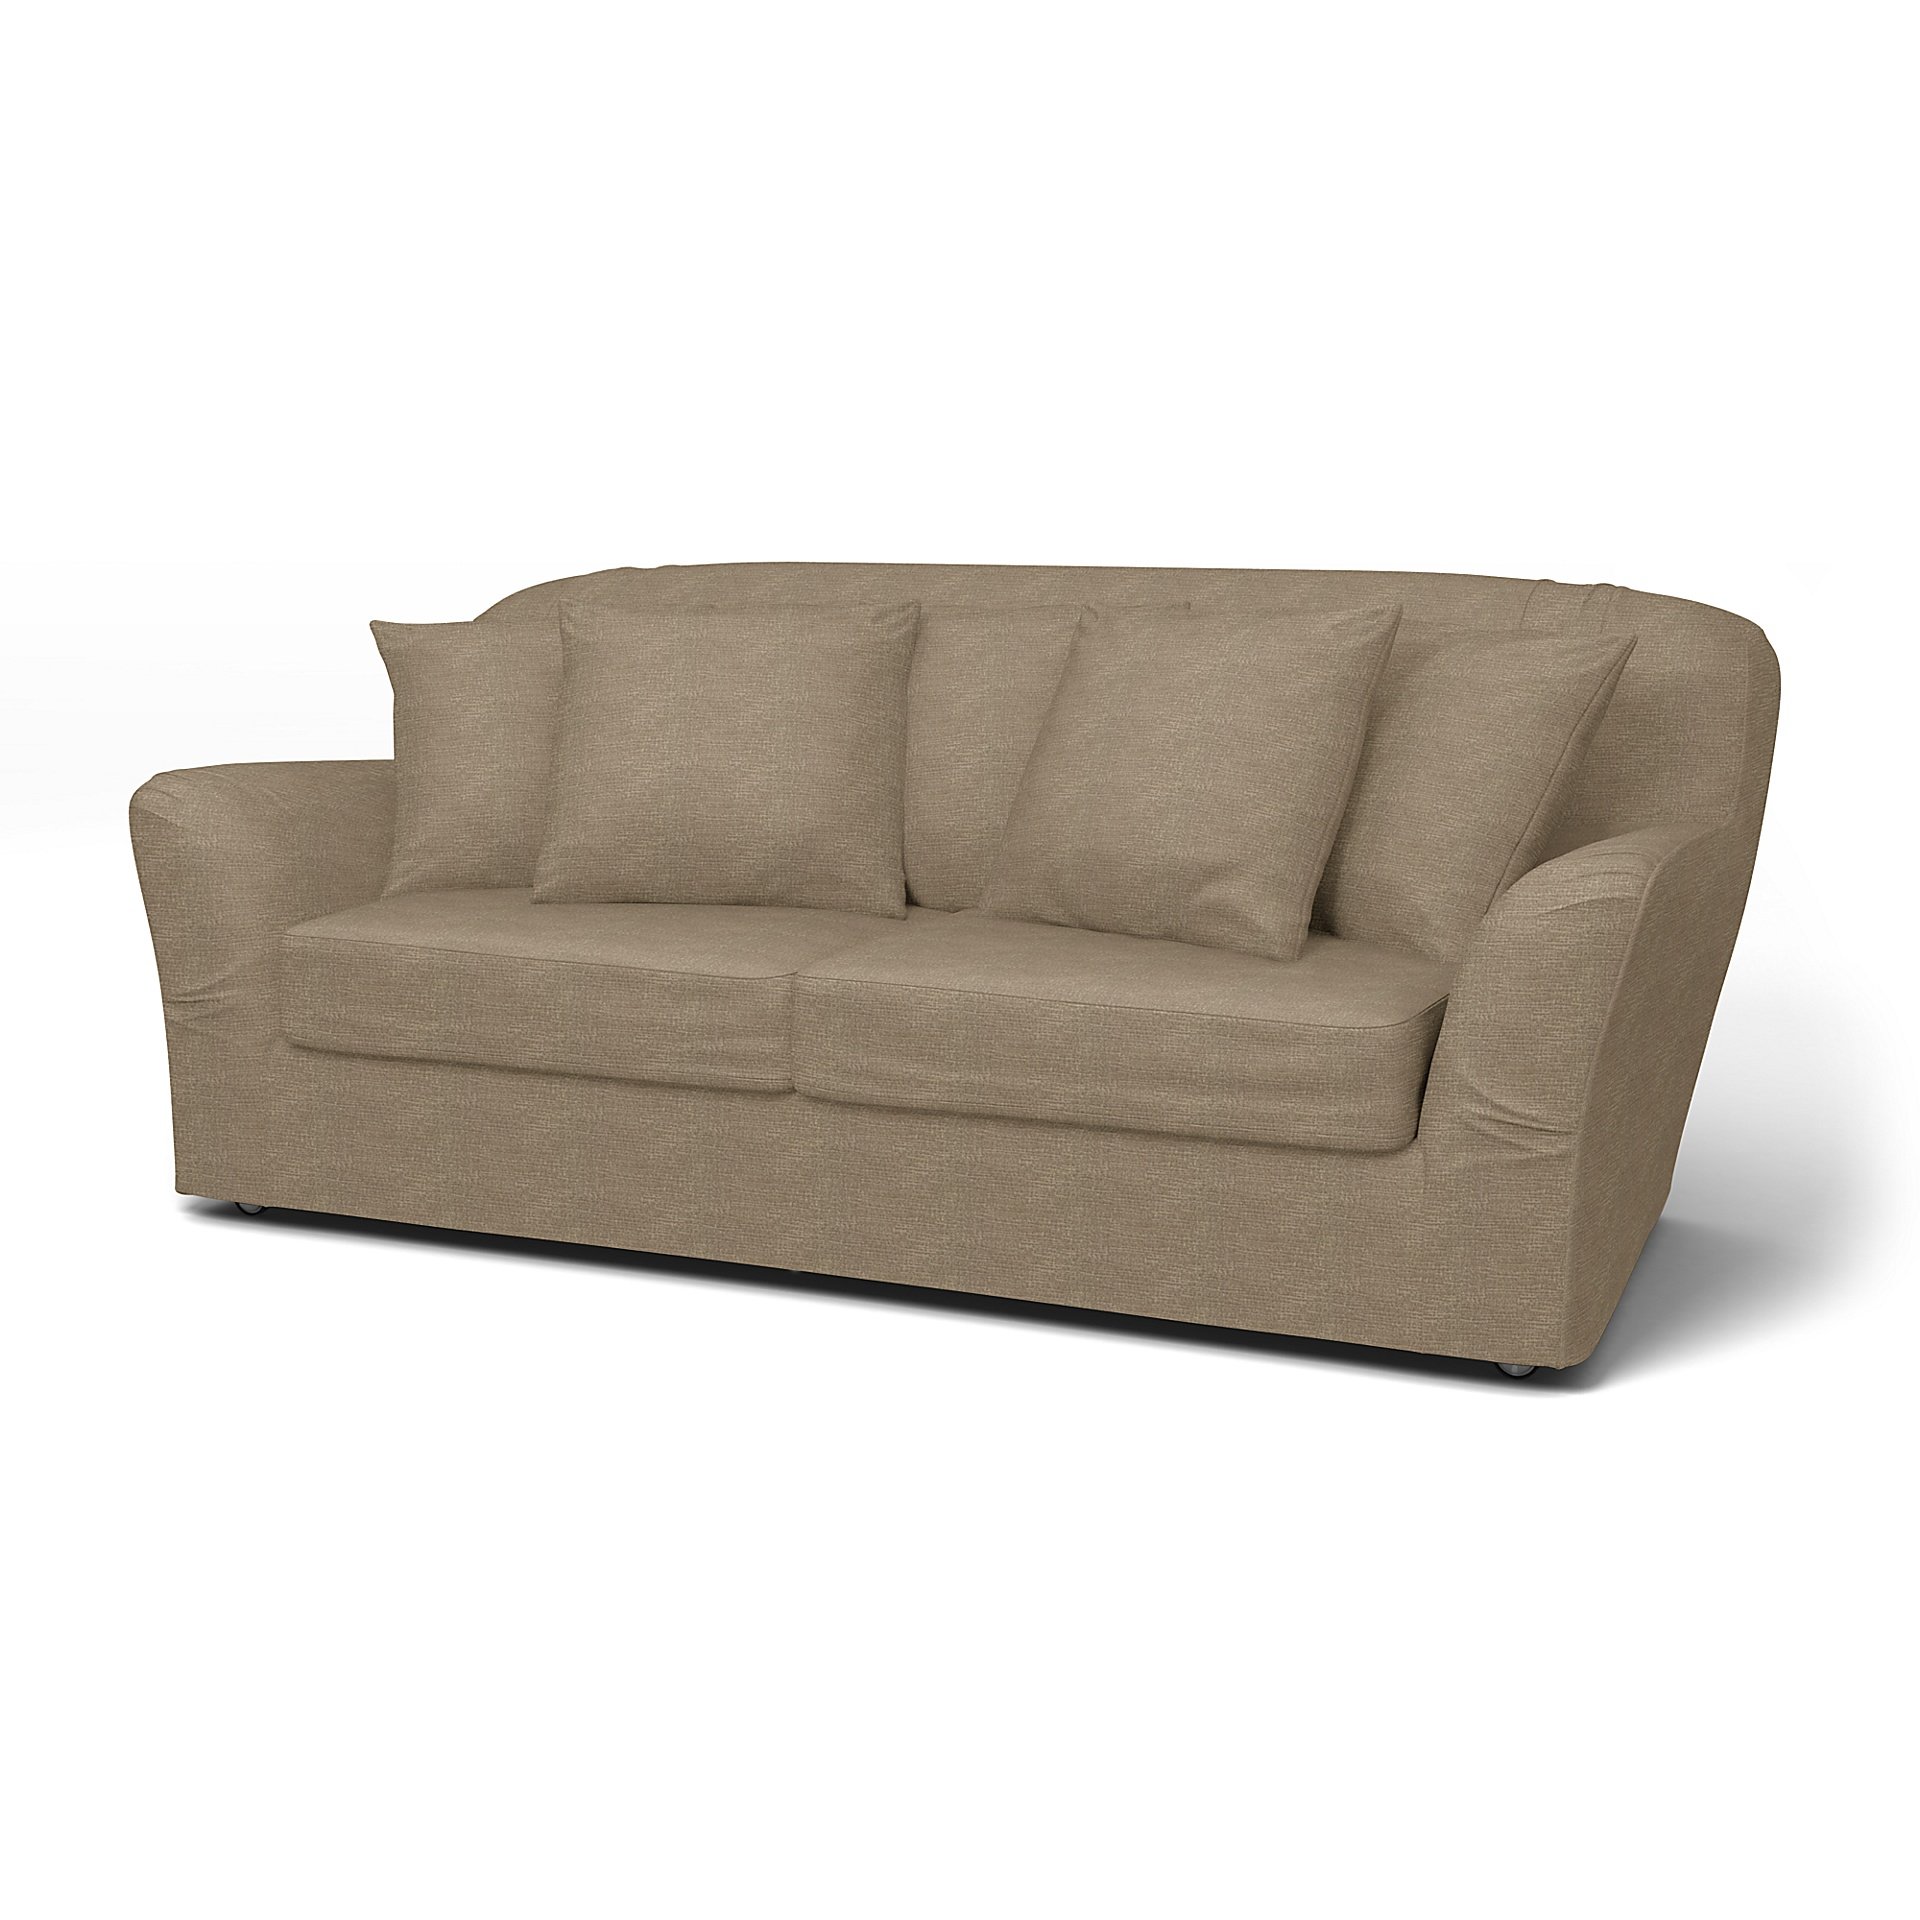 IKEA - Tomelilla Sofa Bed Cover (Small model), Camel, Boucle & Texture - Bemz